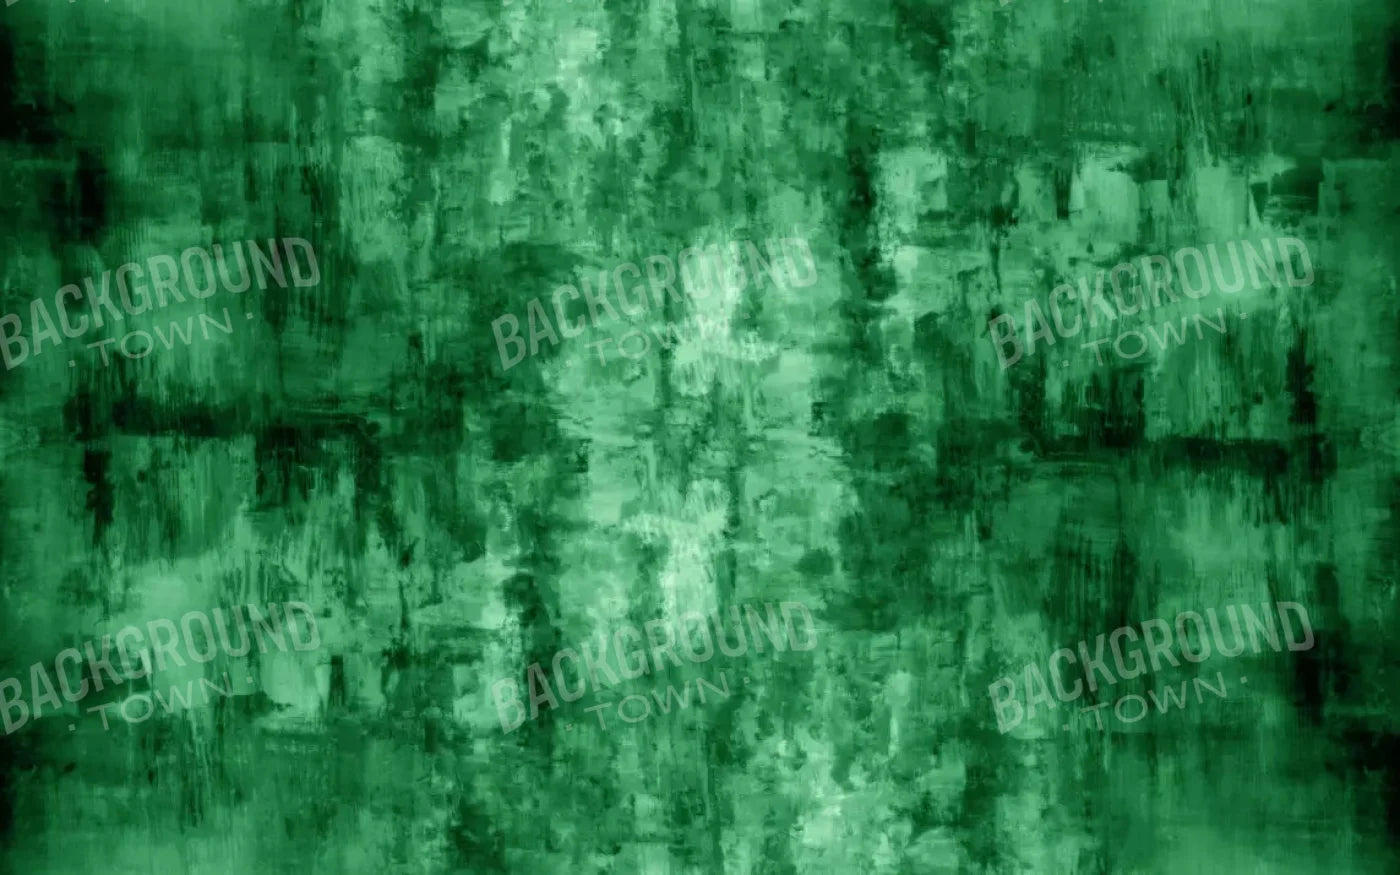 Becker Evergreen 14X9 Ultracloth ( 168 X 108 Inch ) Backdrop